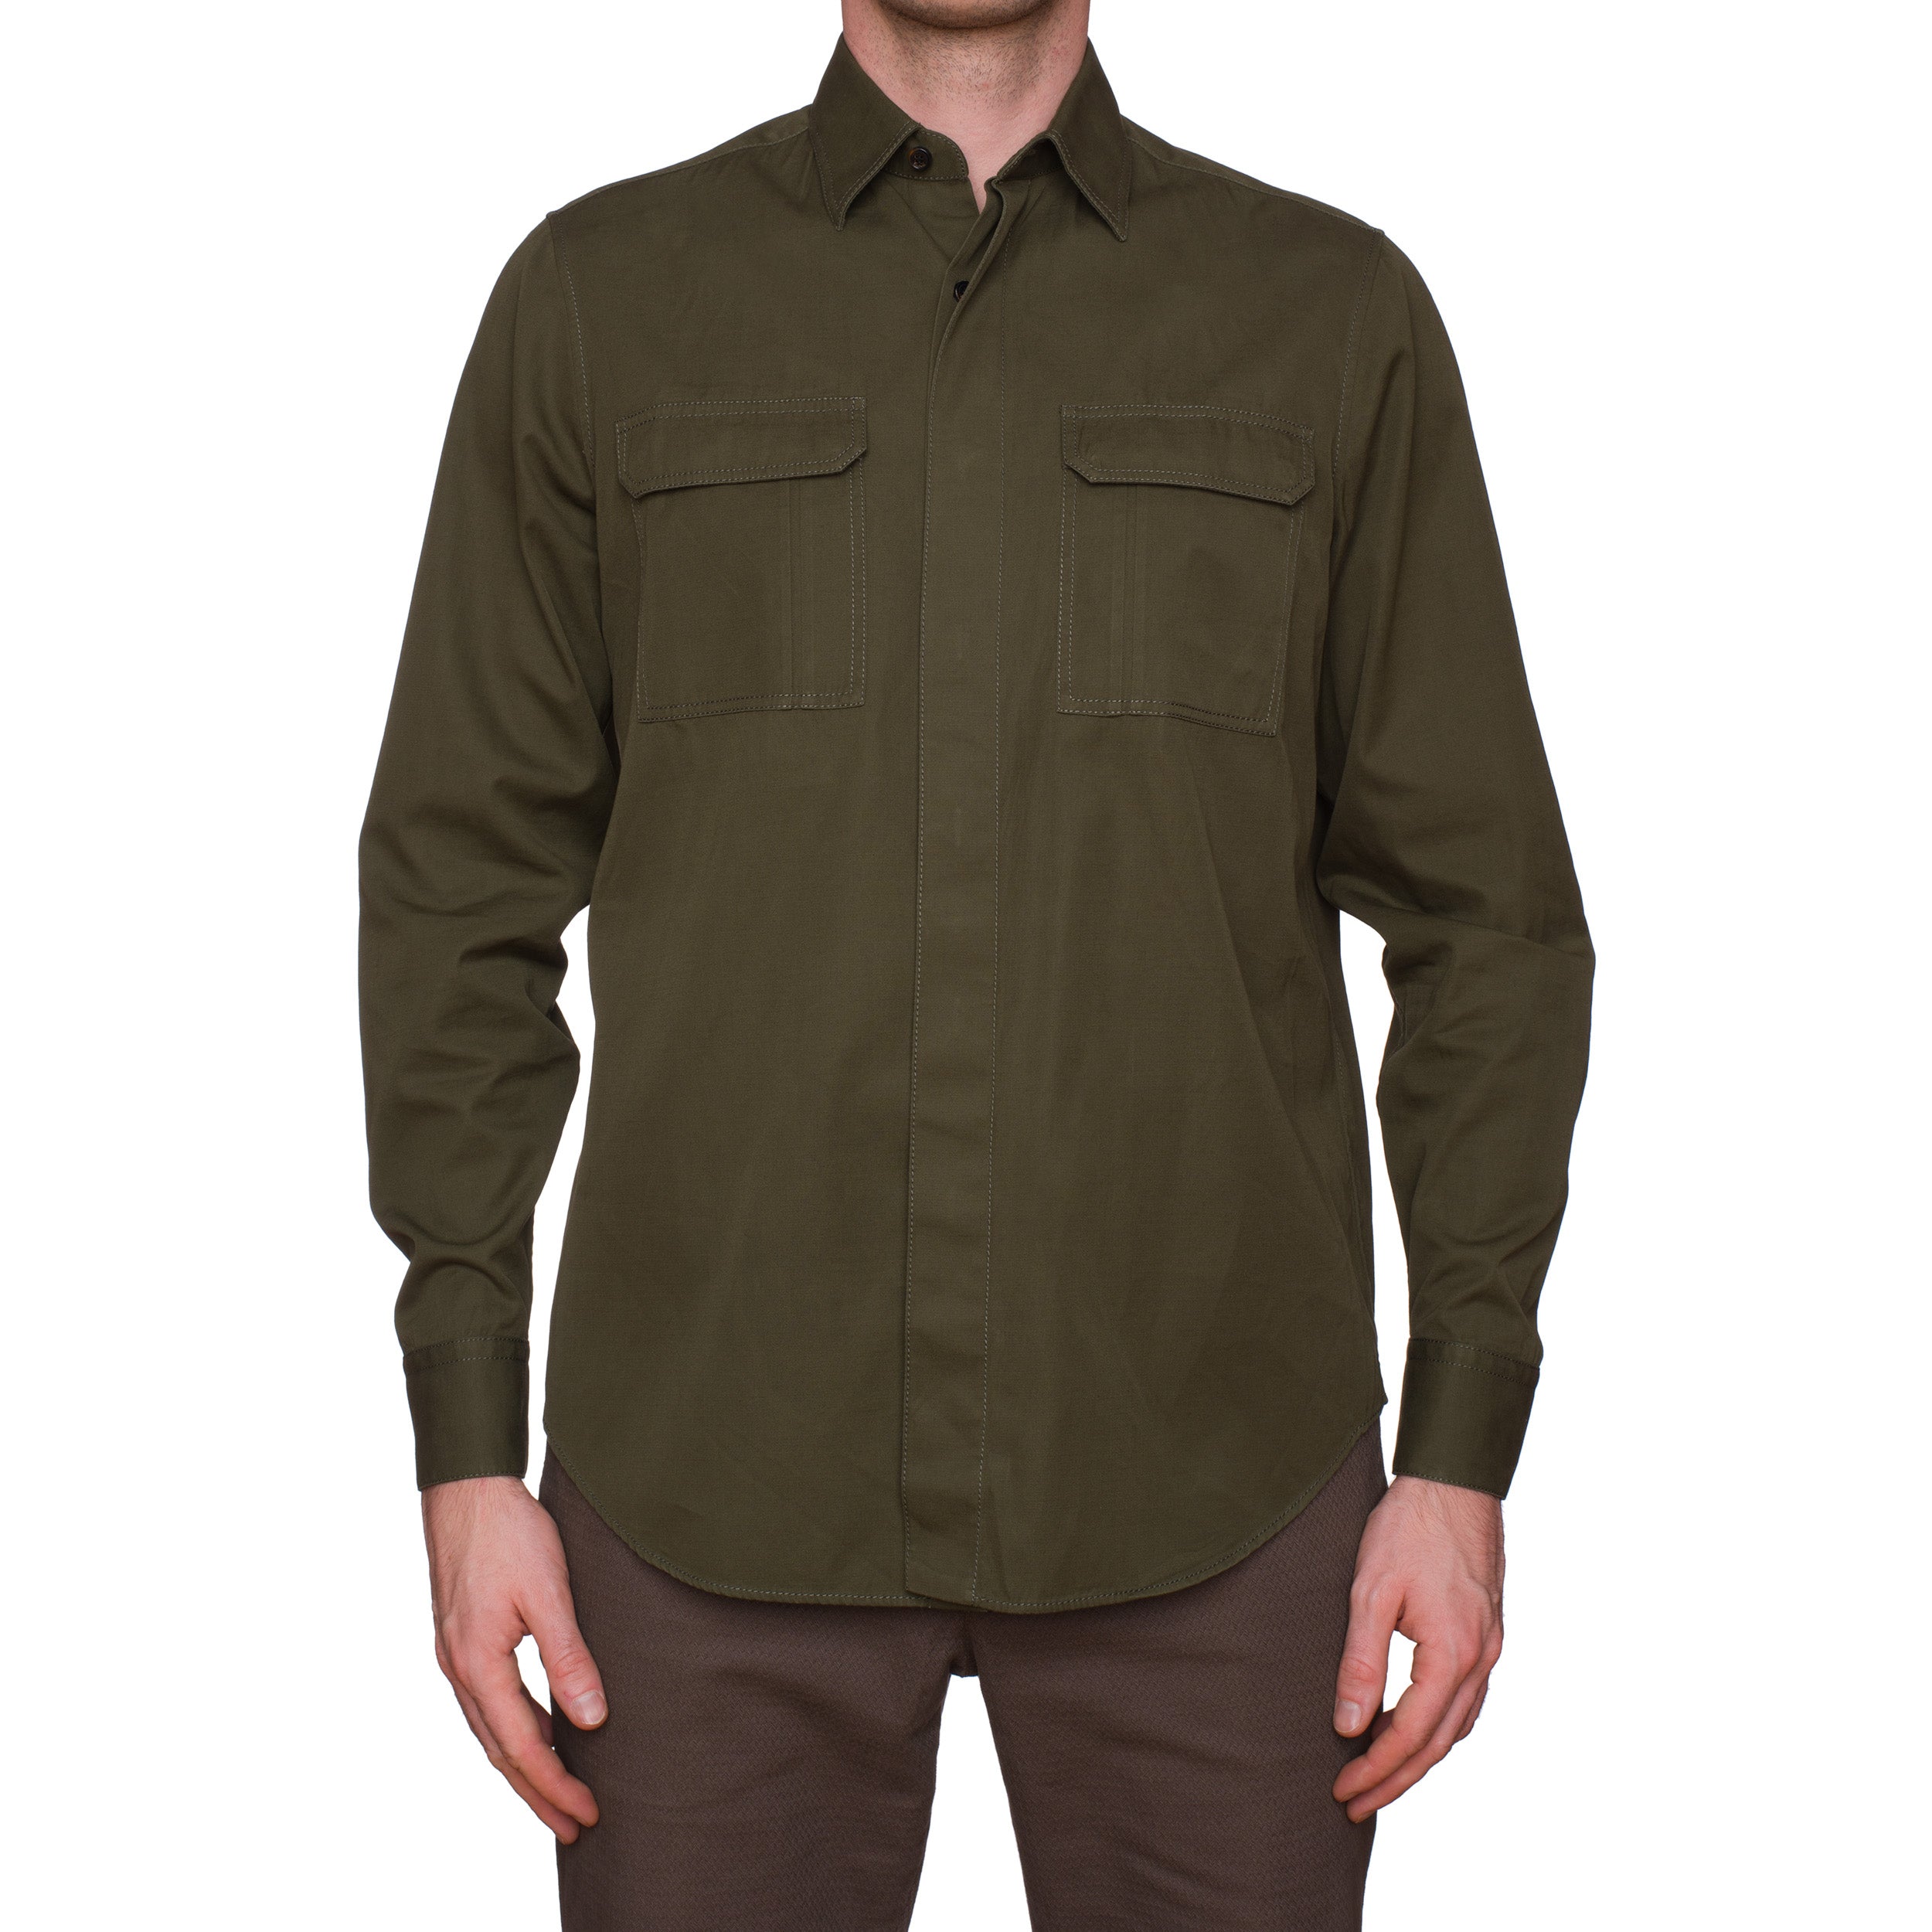 BERLUTI Army Green Cotton-Cashmere Casual Shirt R40 US 15.75 Size M BERLUTI